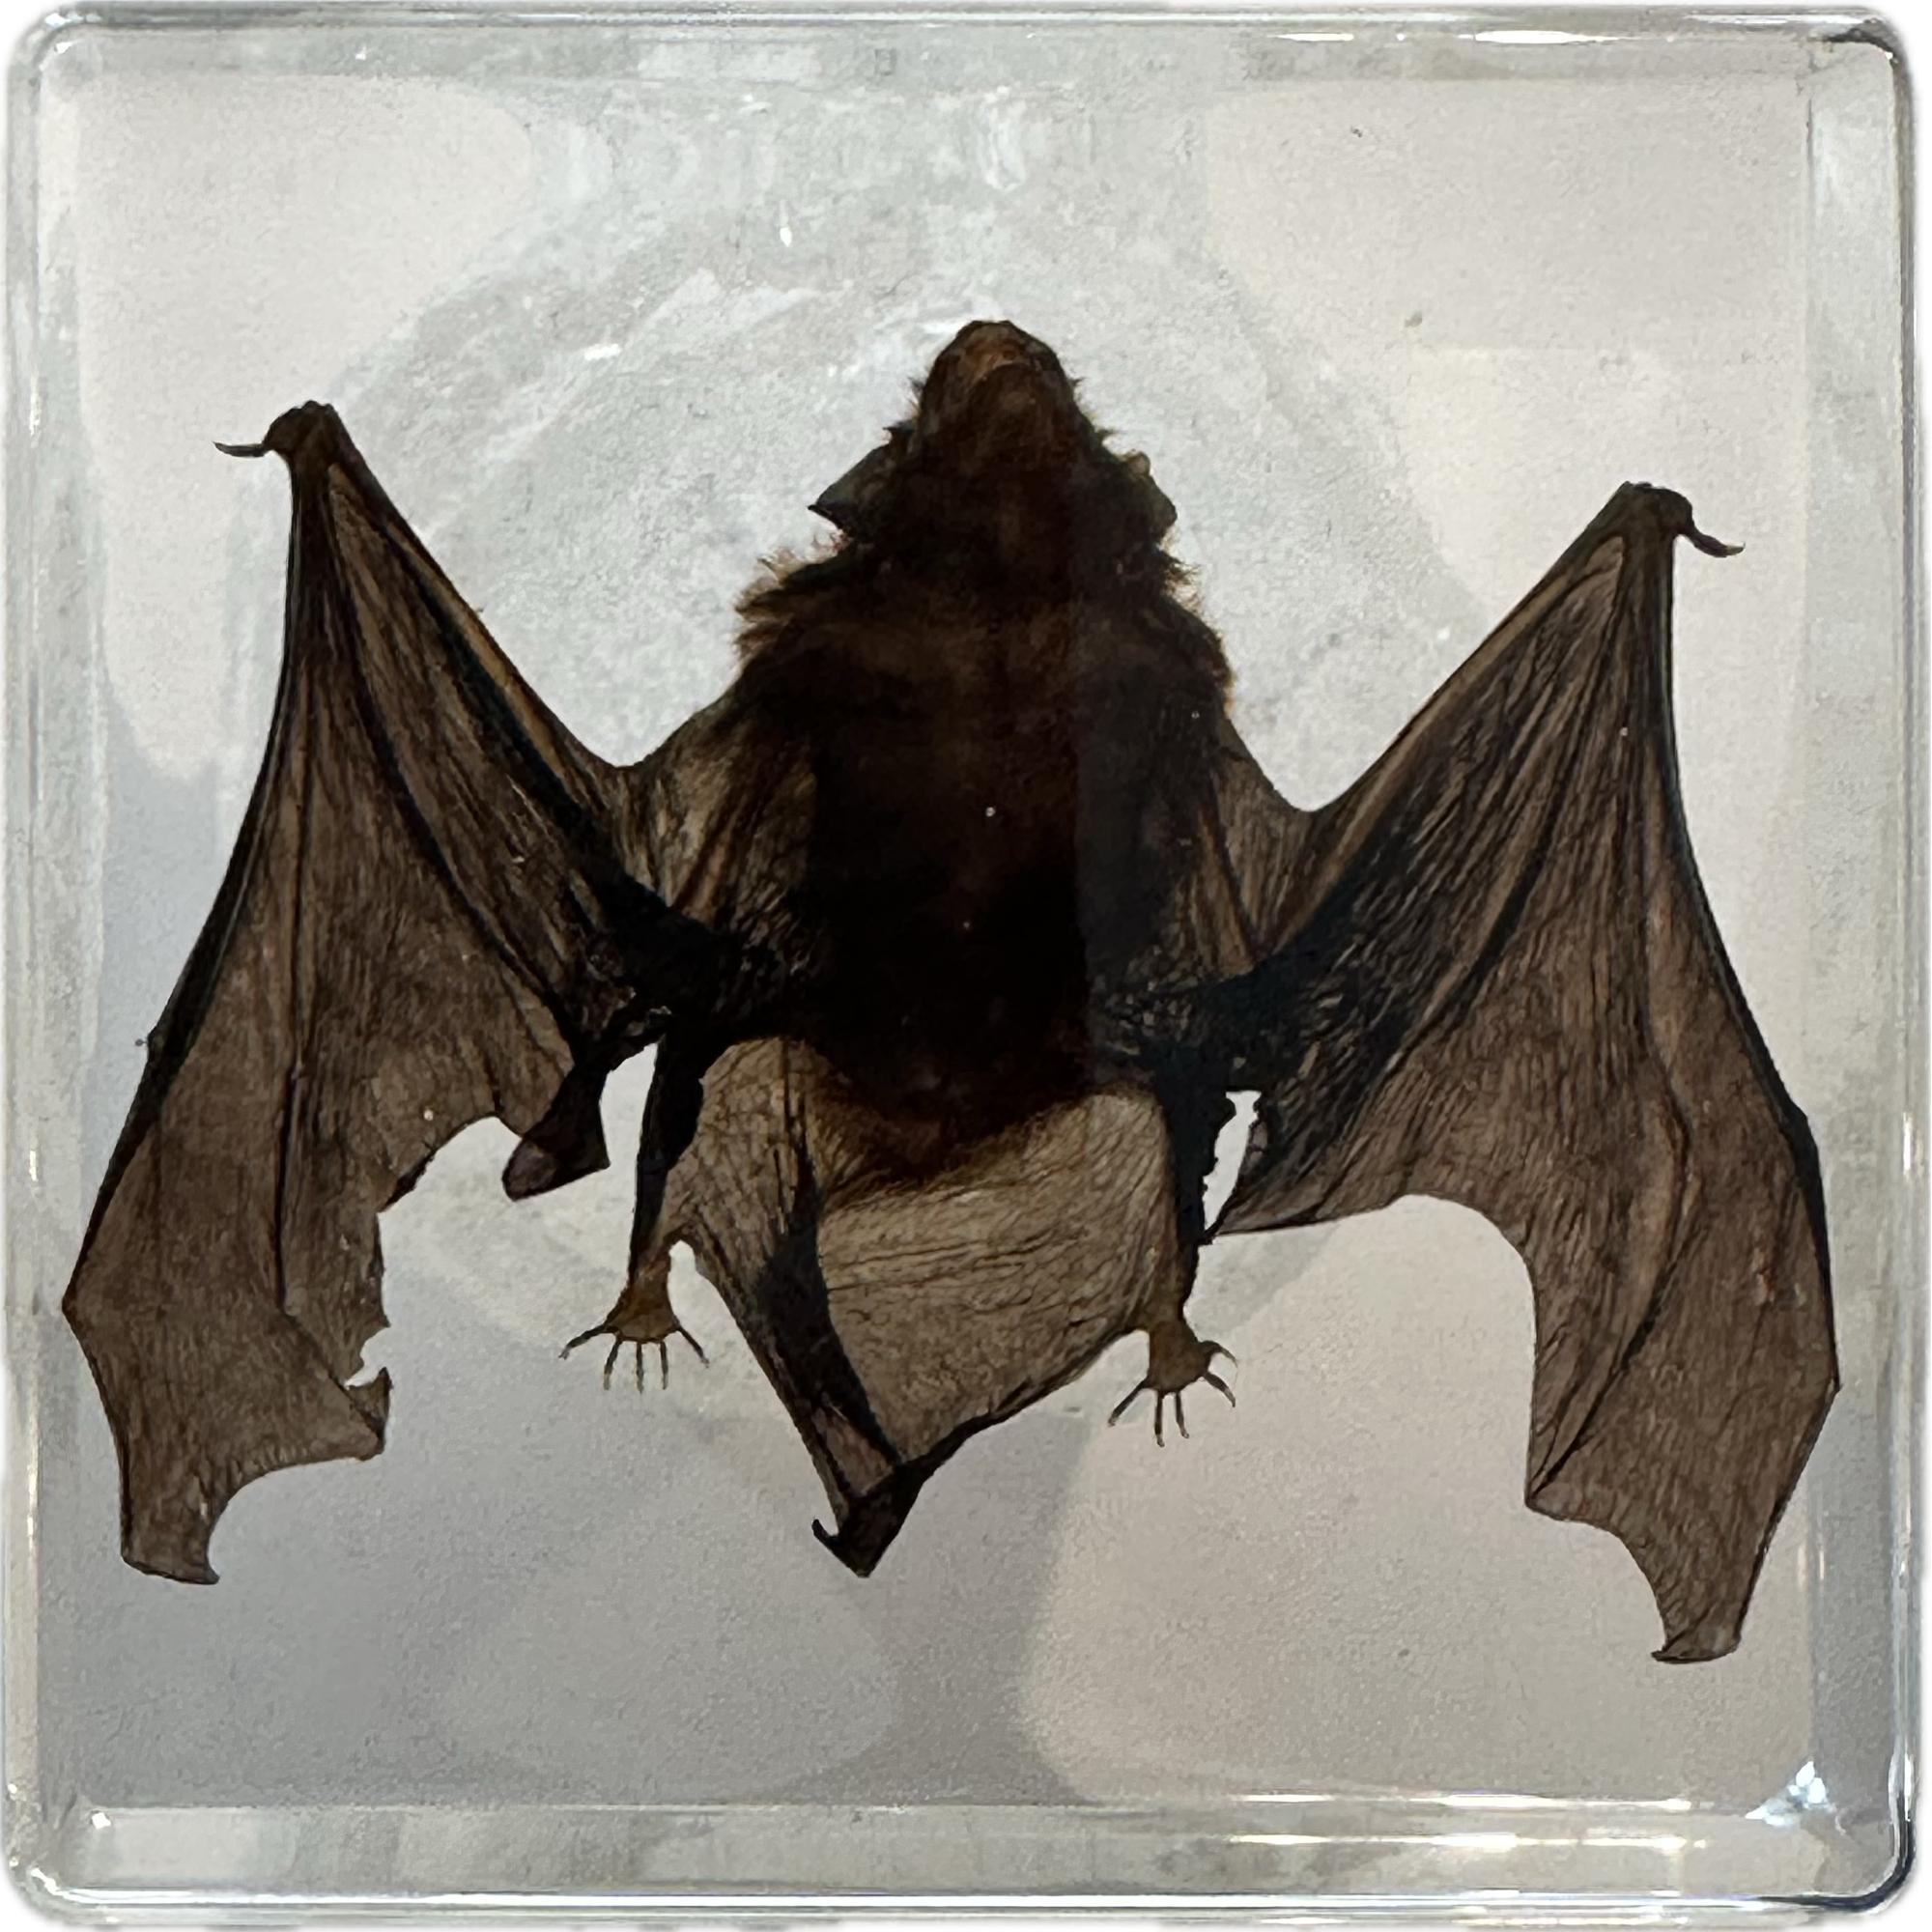 Bat in clear Acryllic Prehistoric Online